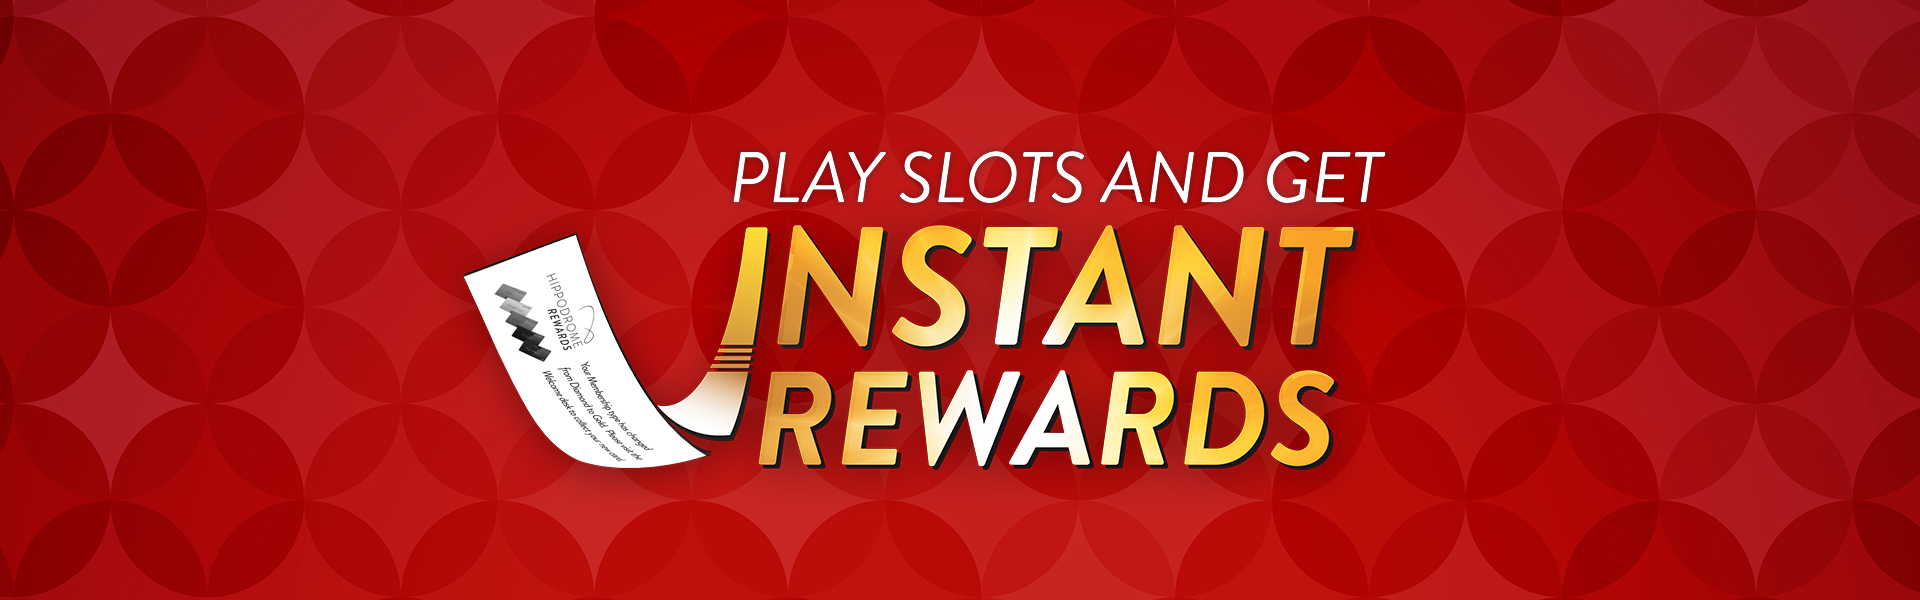 Slots Instant Rewards